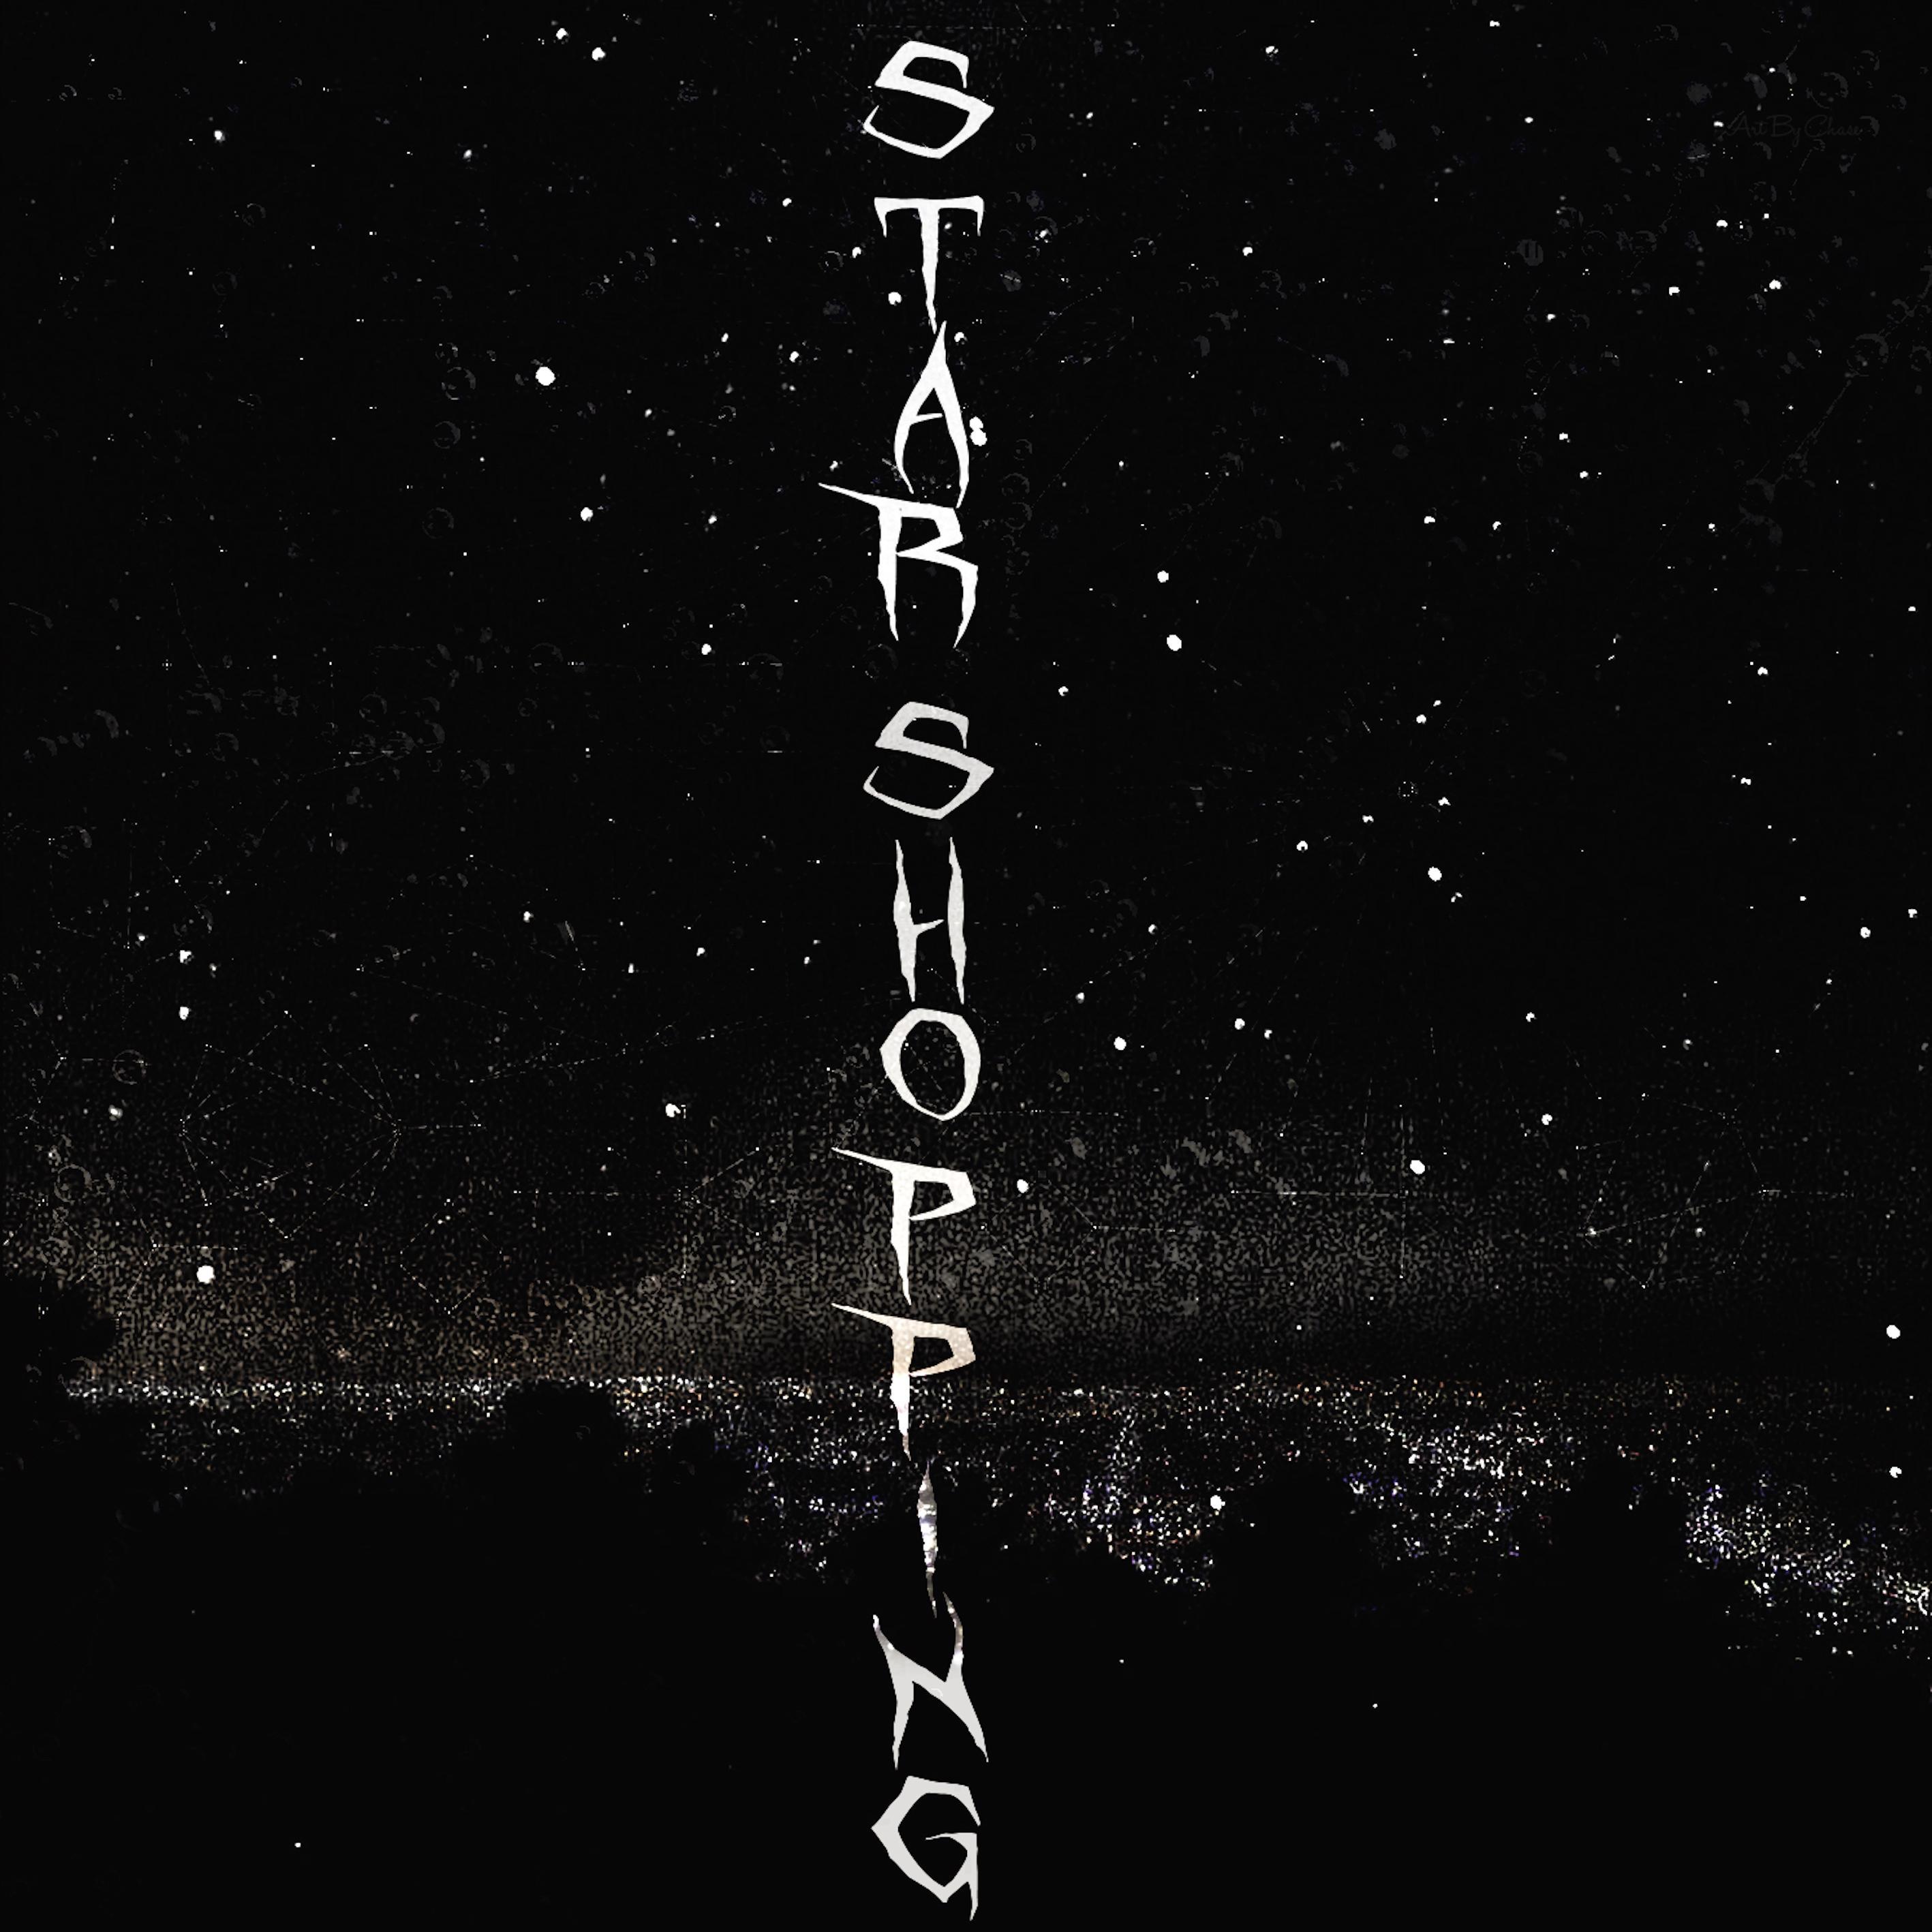 Star Shopping歌词 歌手Lil Peep-专辑Star Shopping-单曲《Star Shopping》LRC歌词下载